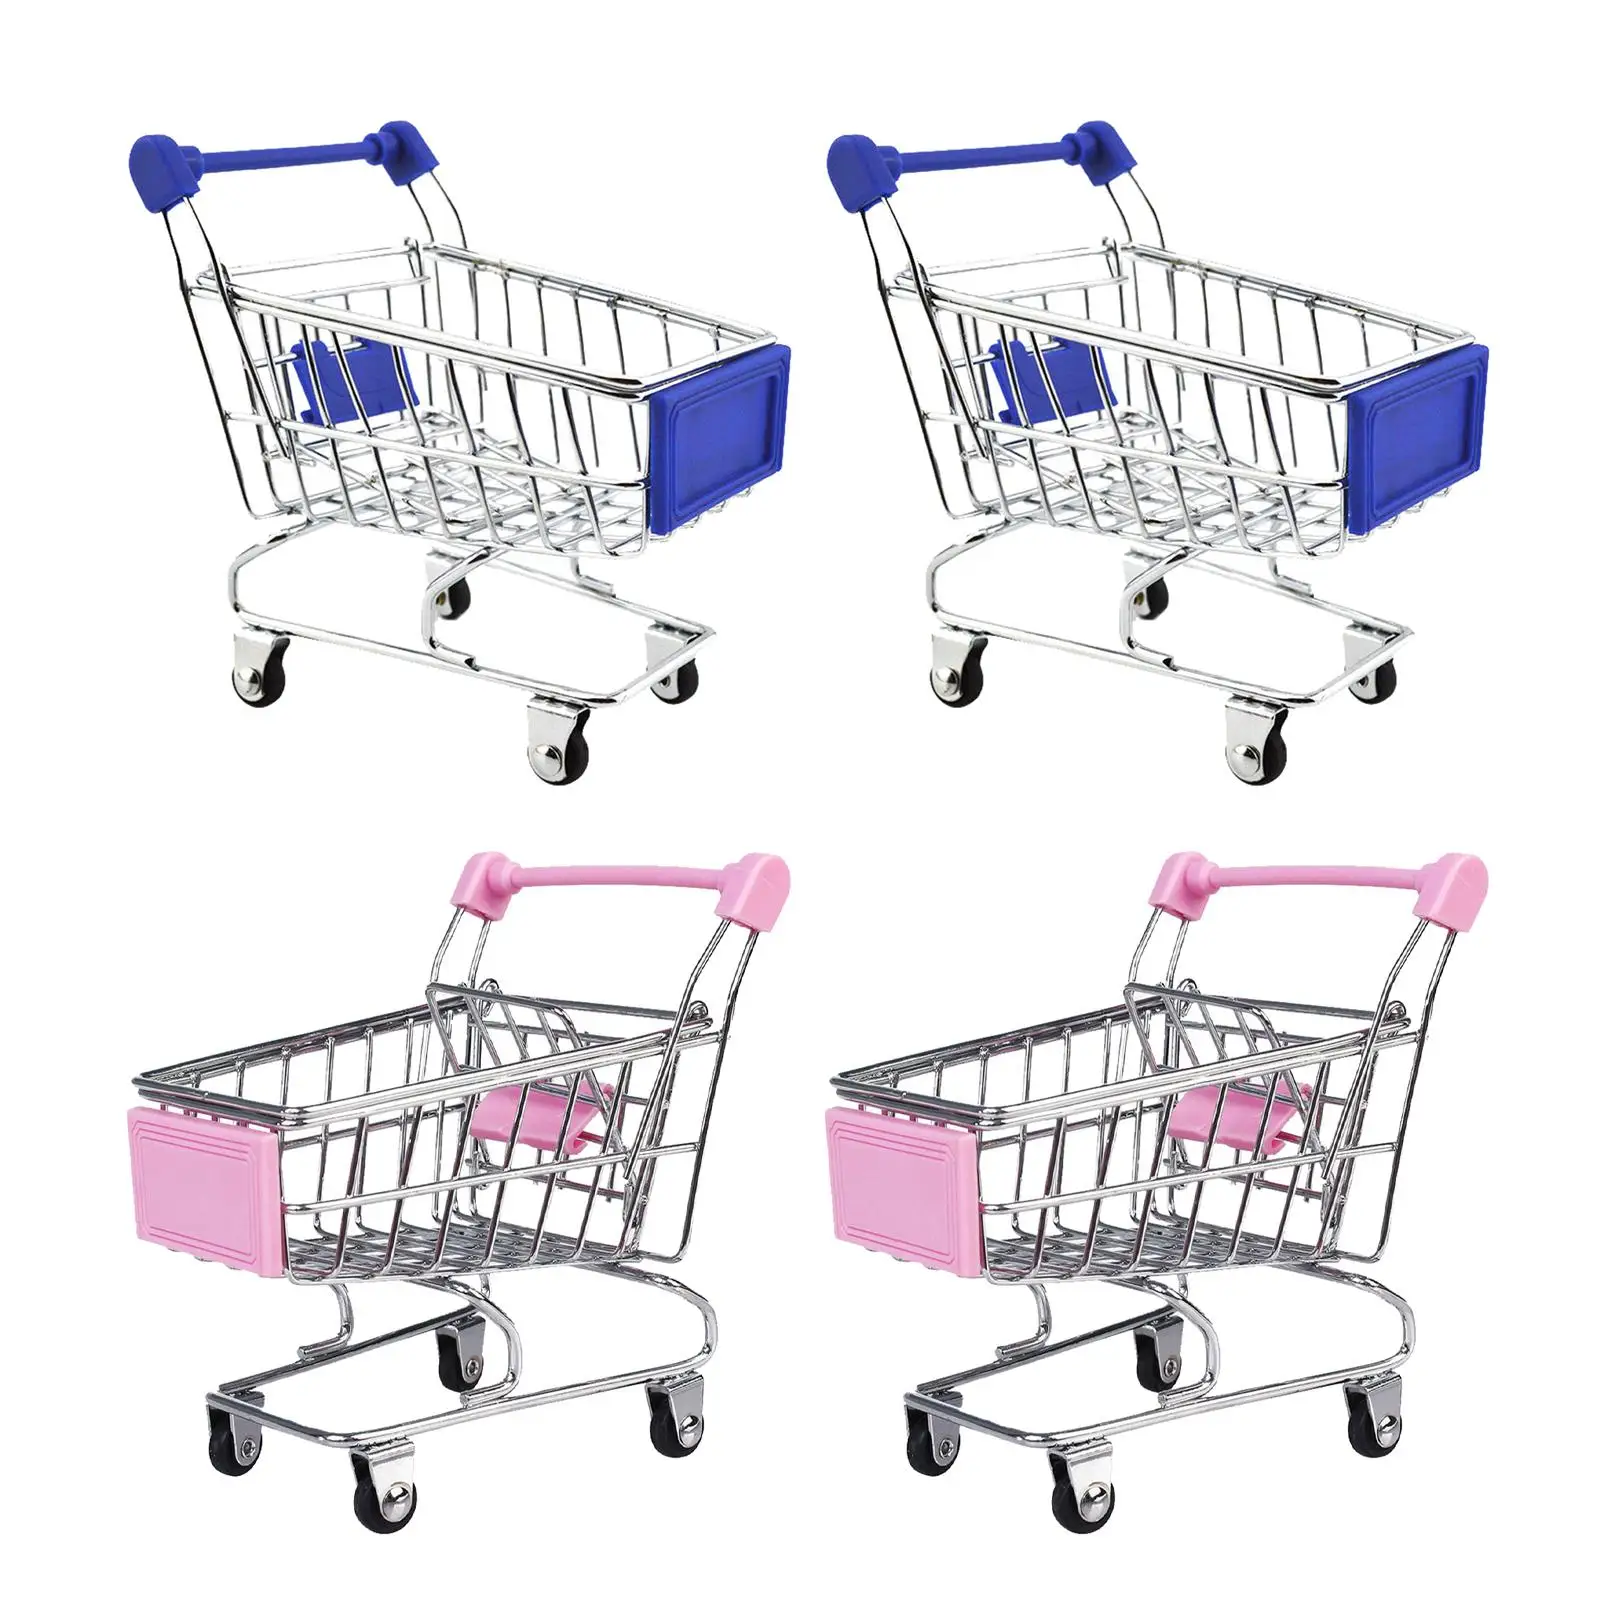 4x Shopping Cart Trolley Toy Desktop Decoration Ornament Decor Handcart